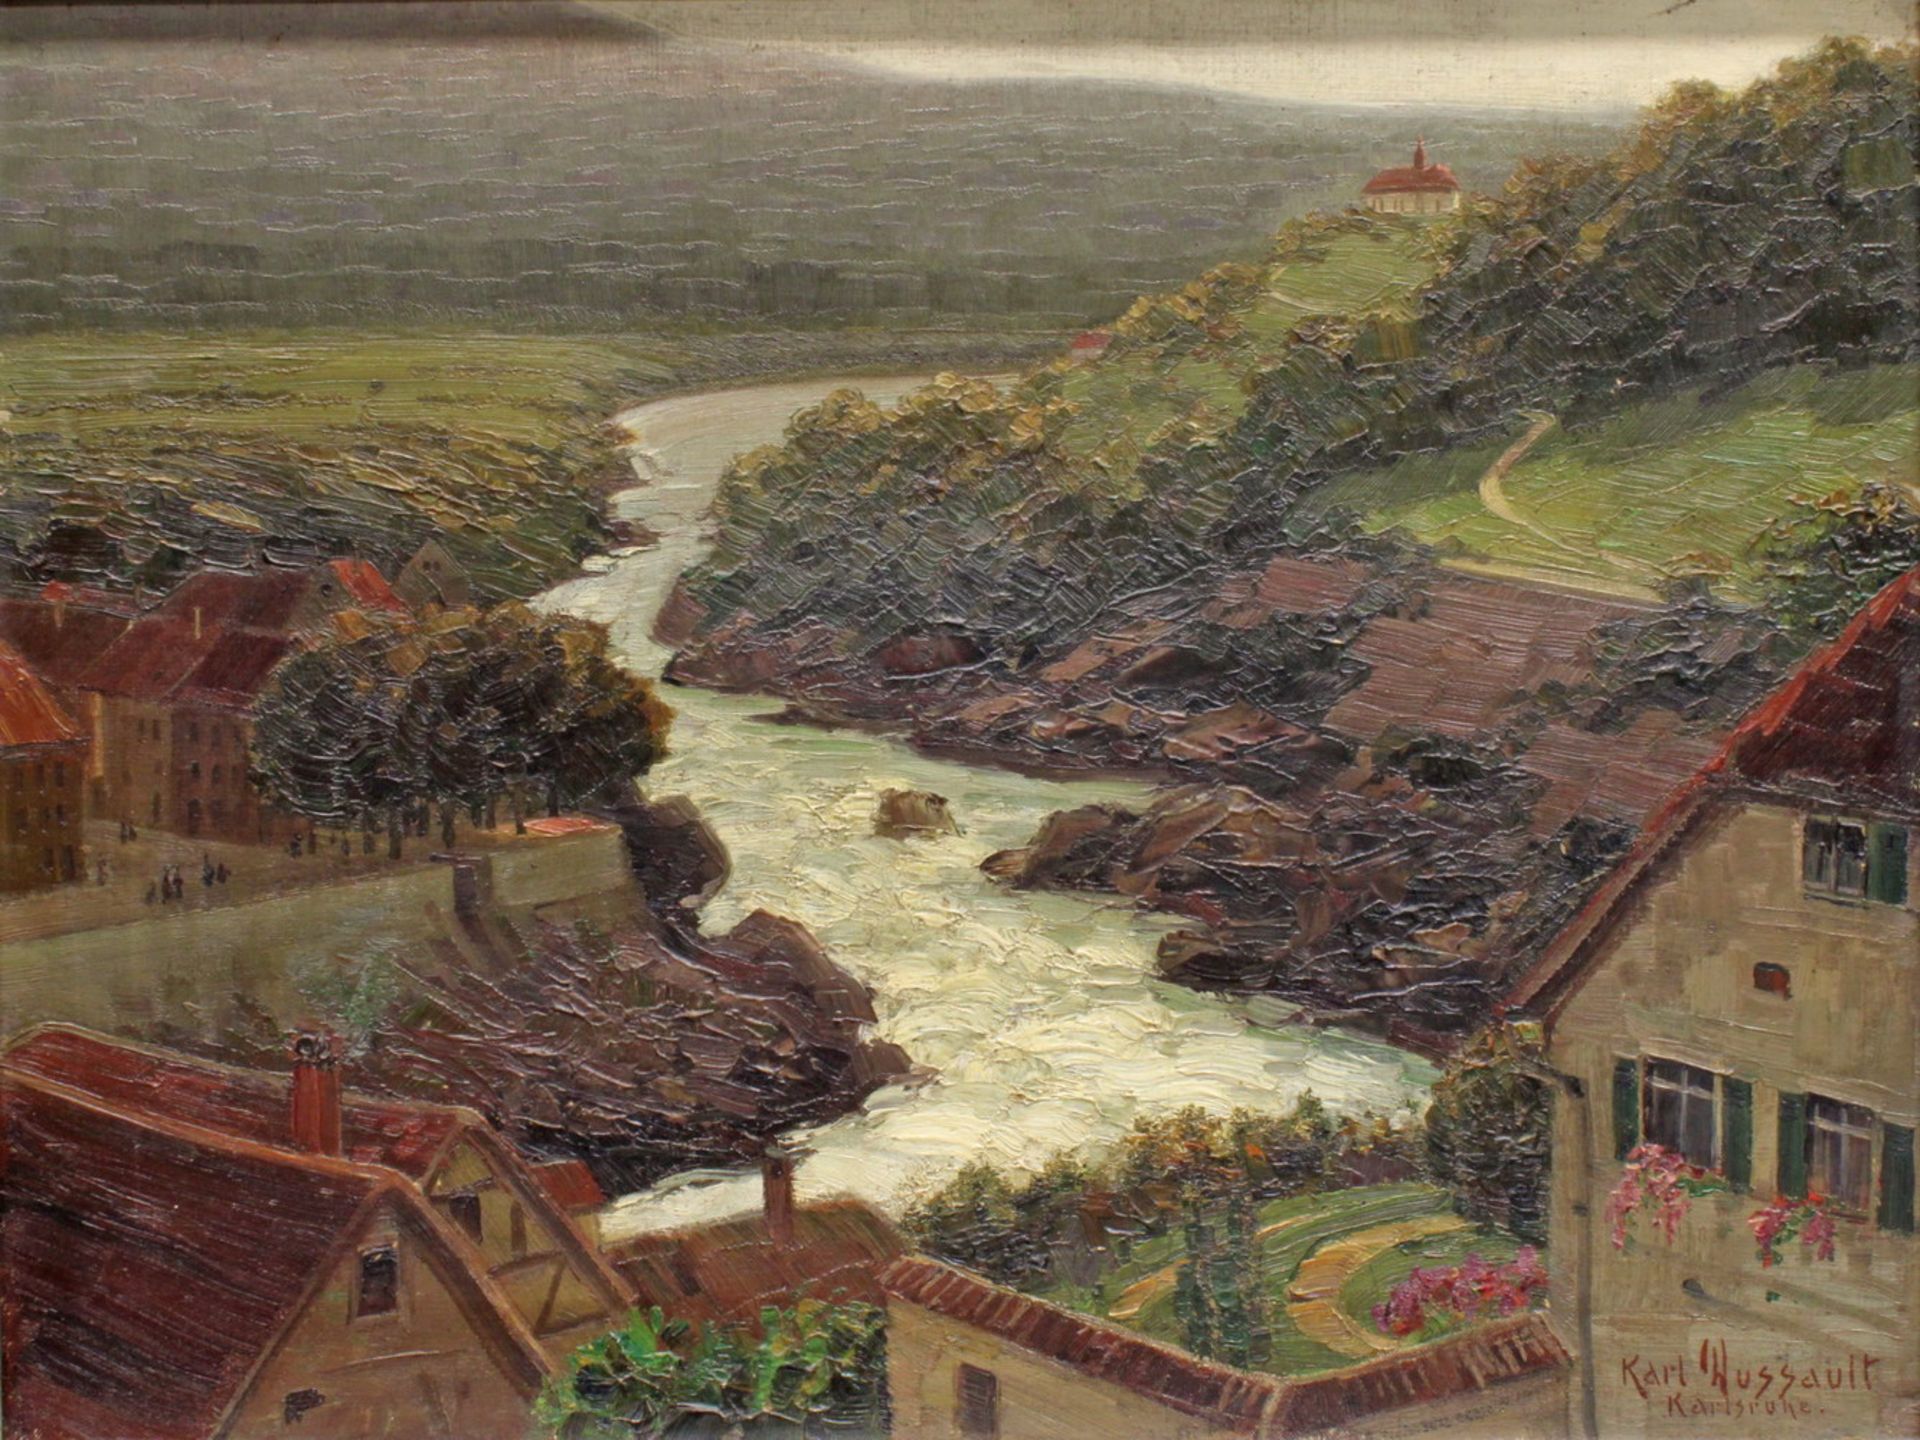 Dussault, Karl (1860 - 1930, Studium an der KA Karlsruhe, Landschaftsmaler), "Stadt am Fluss", Öl